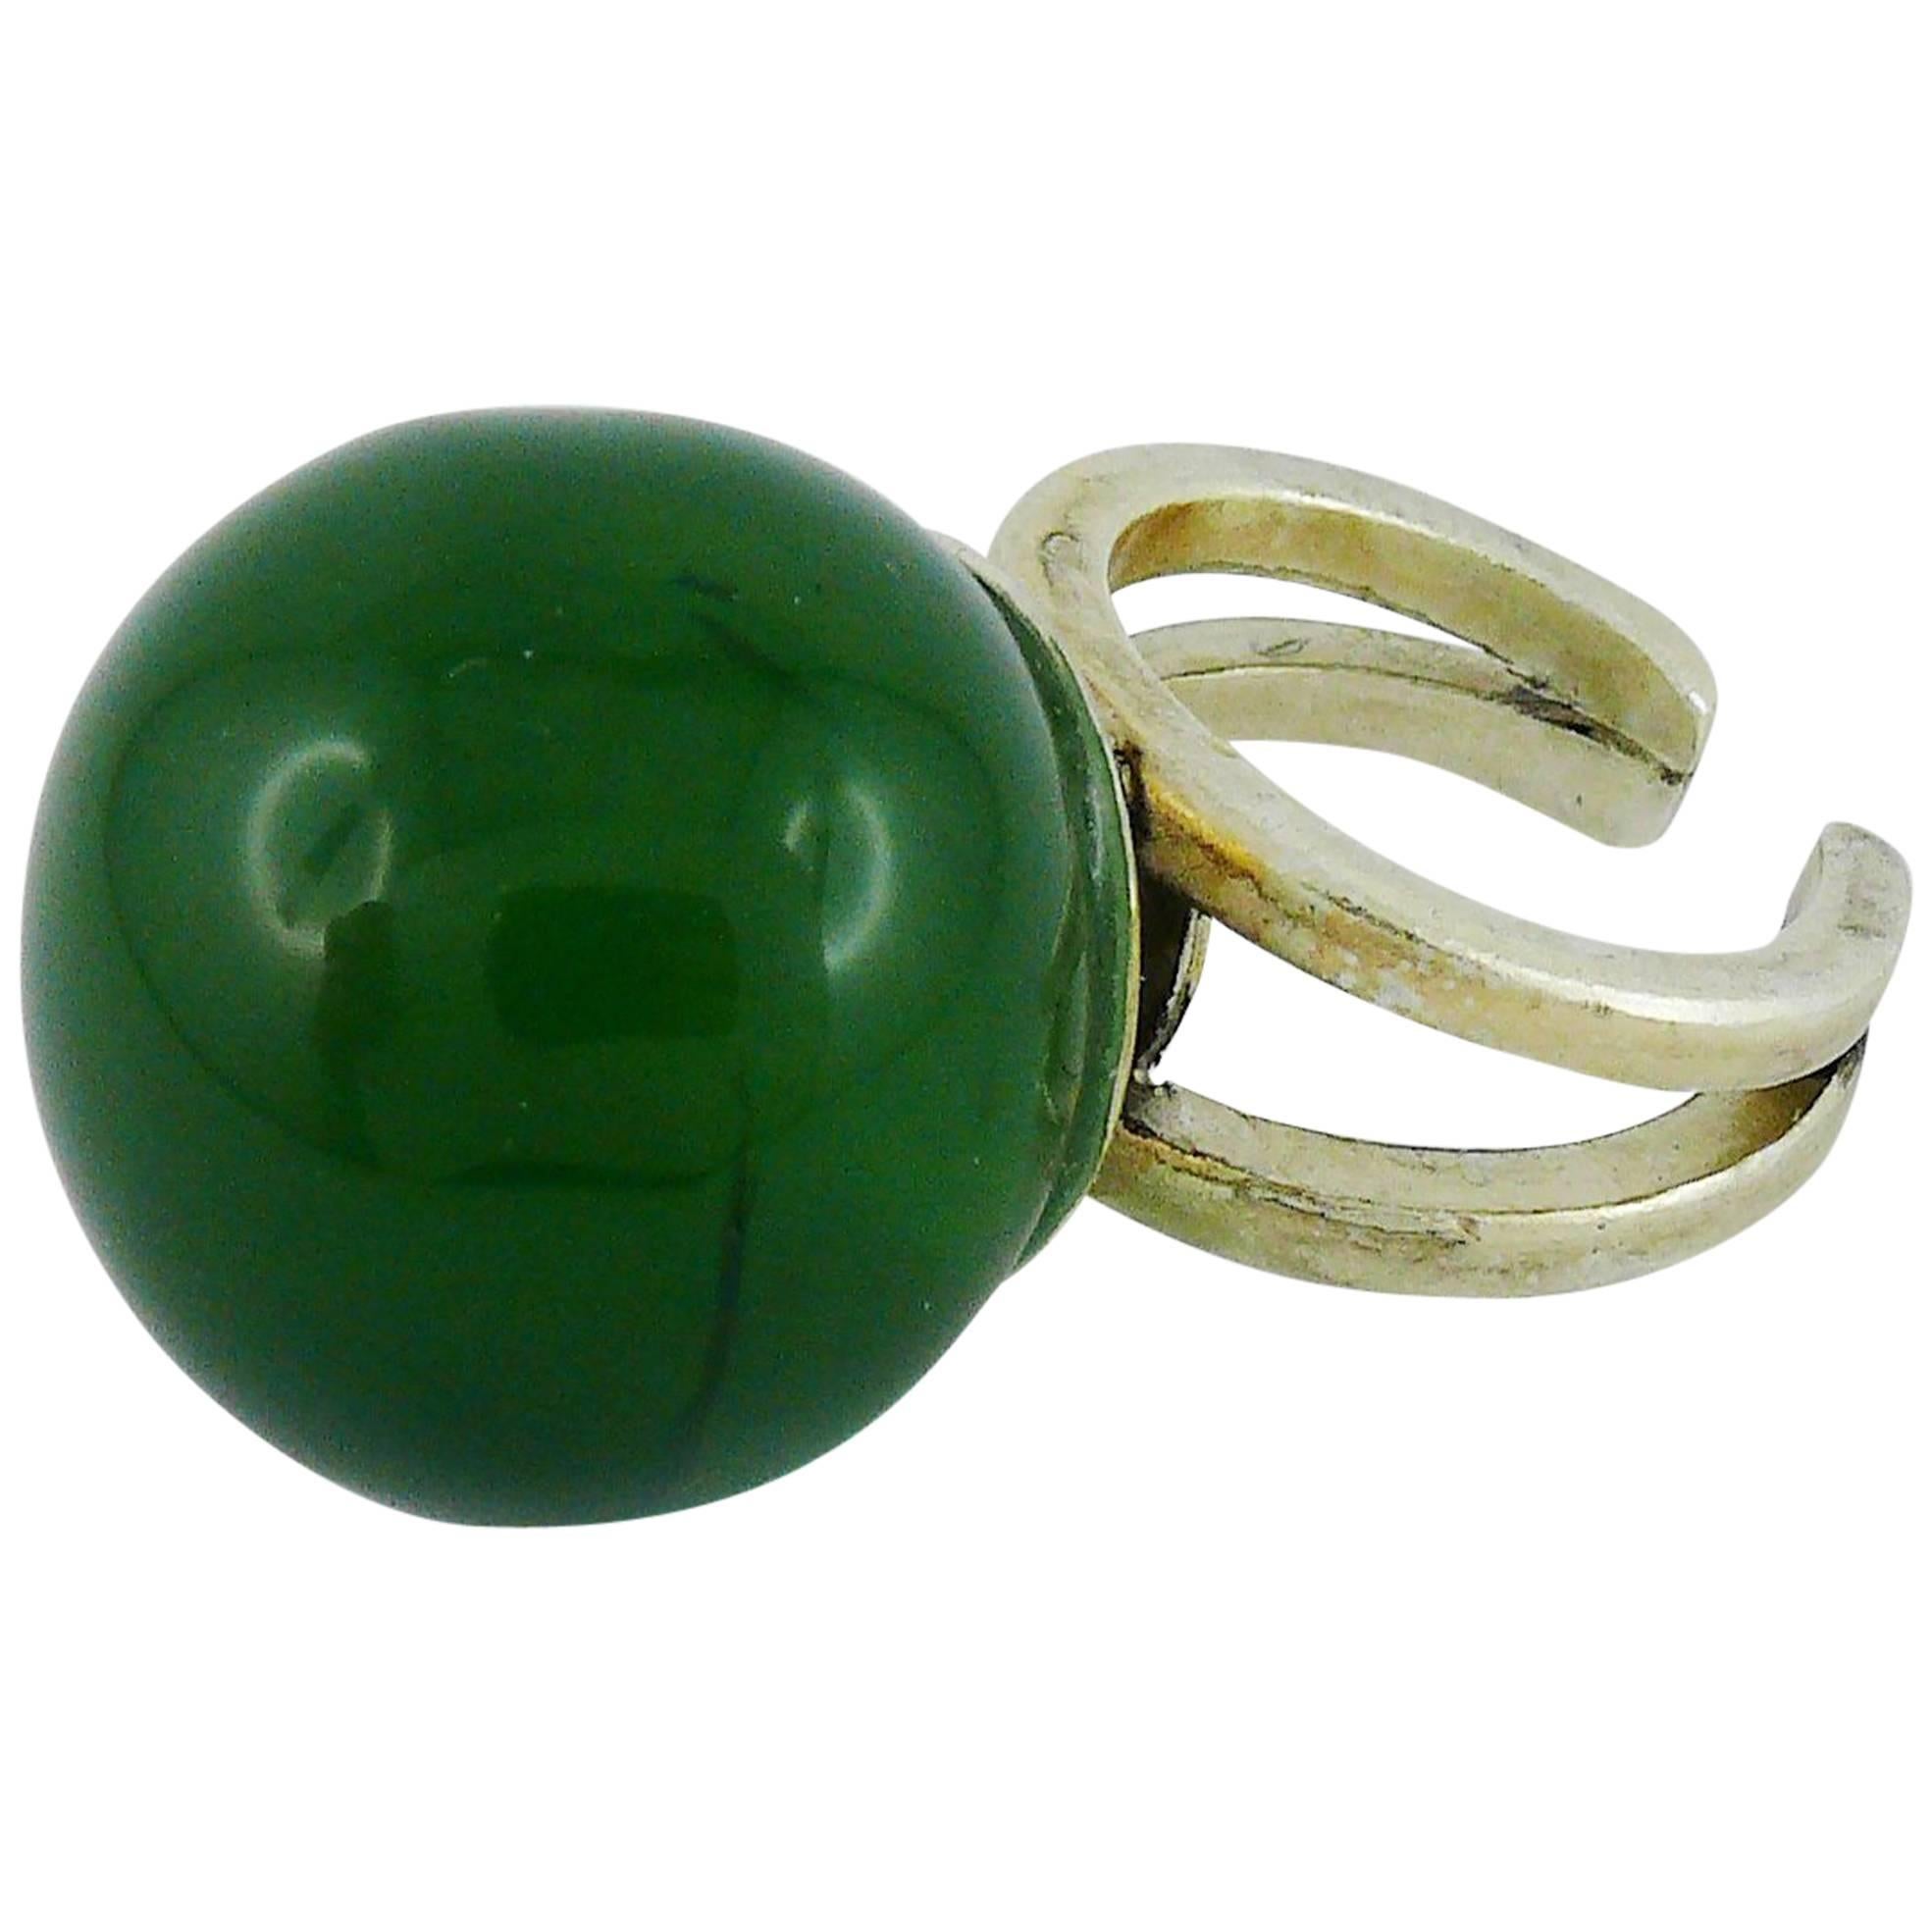 Jean Paul Gaultier Vintage Green Ball Ring